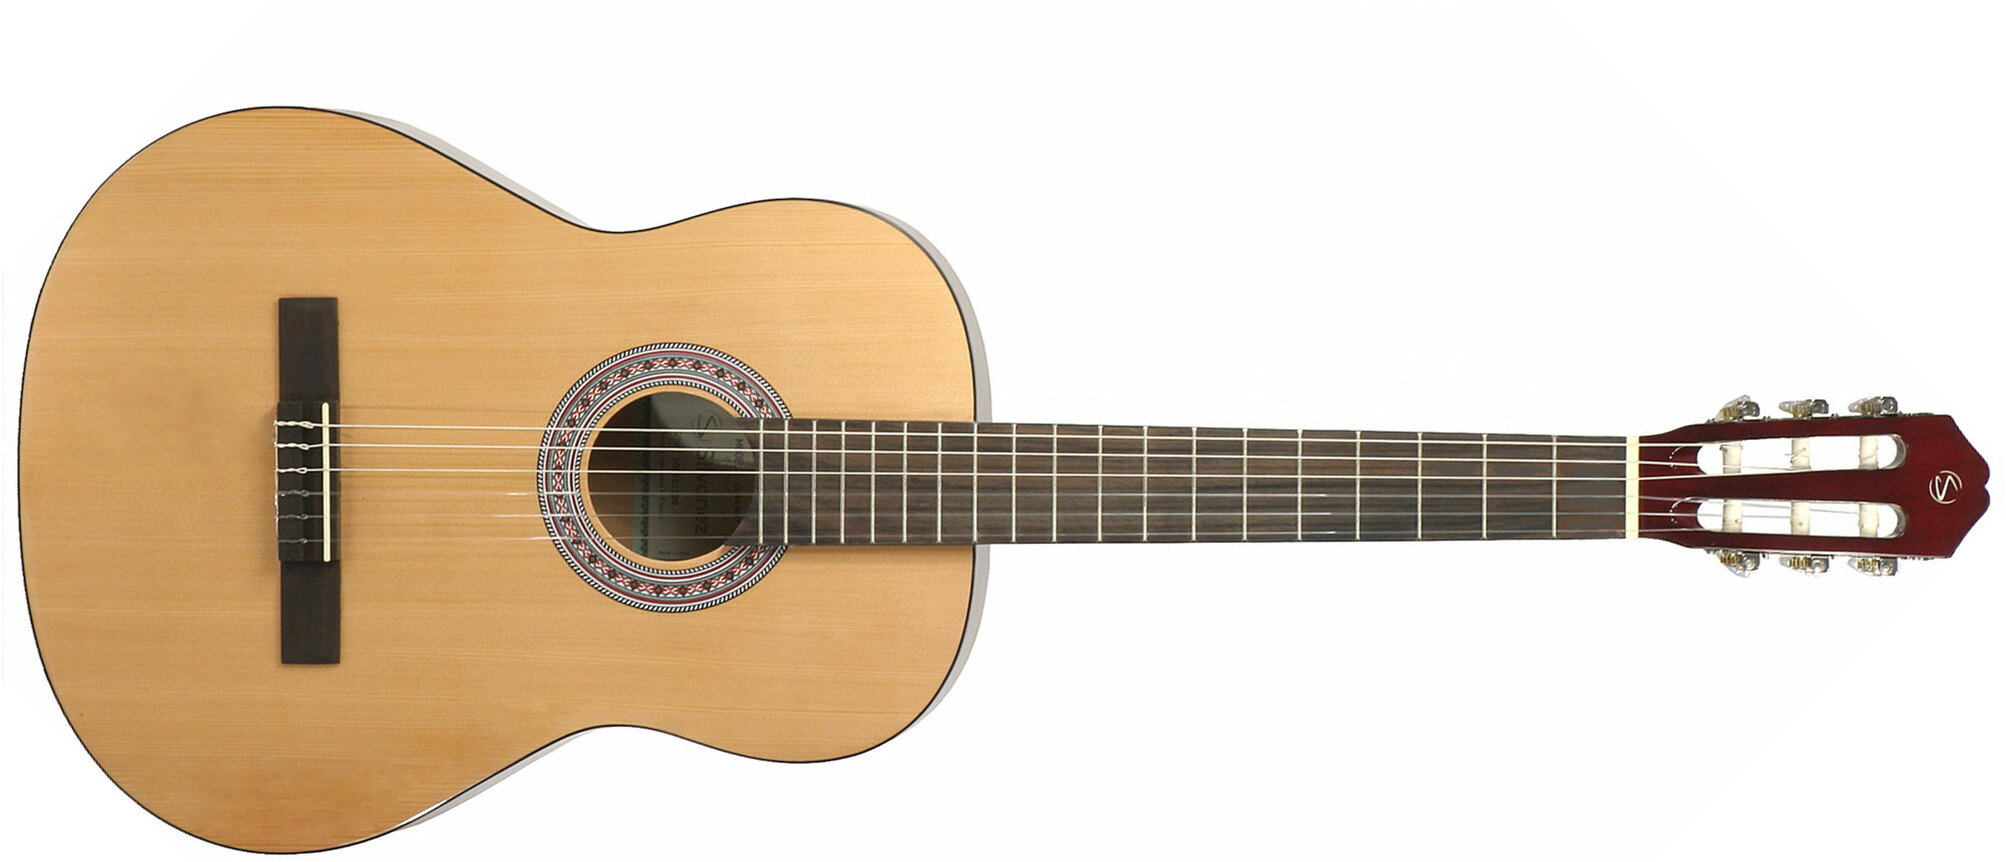 Silvanez Cl44-nat - Natural - Classical guitar 4/4 size - Main picture